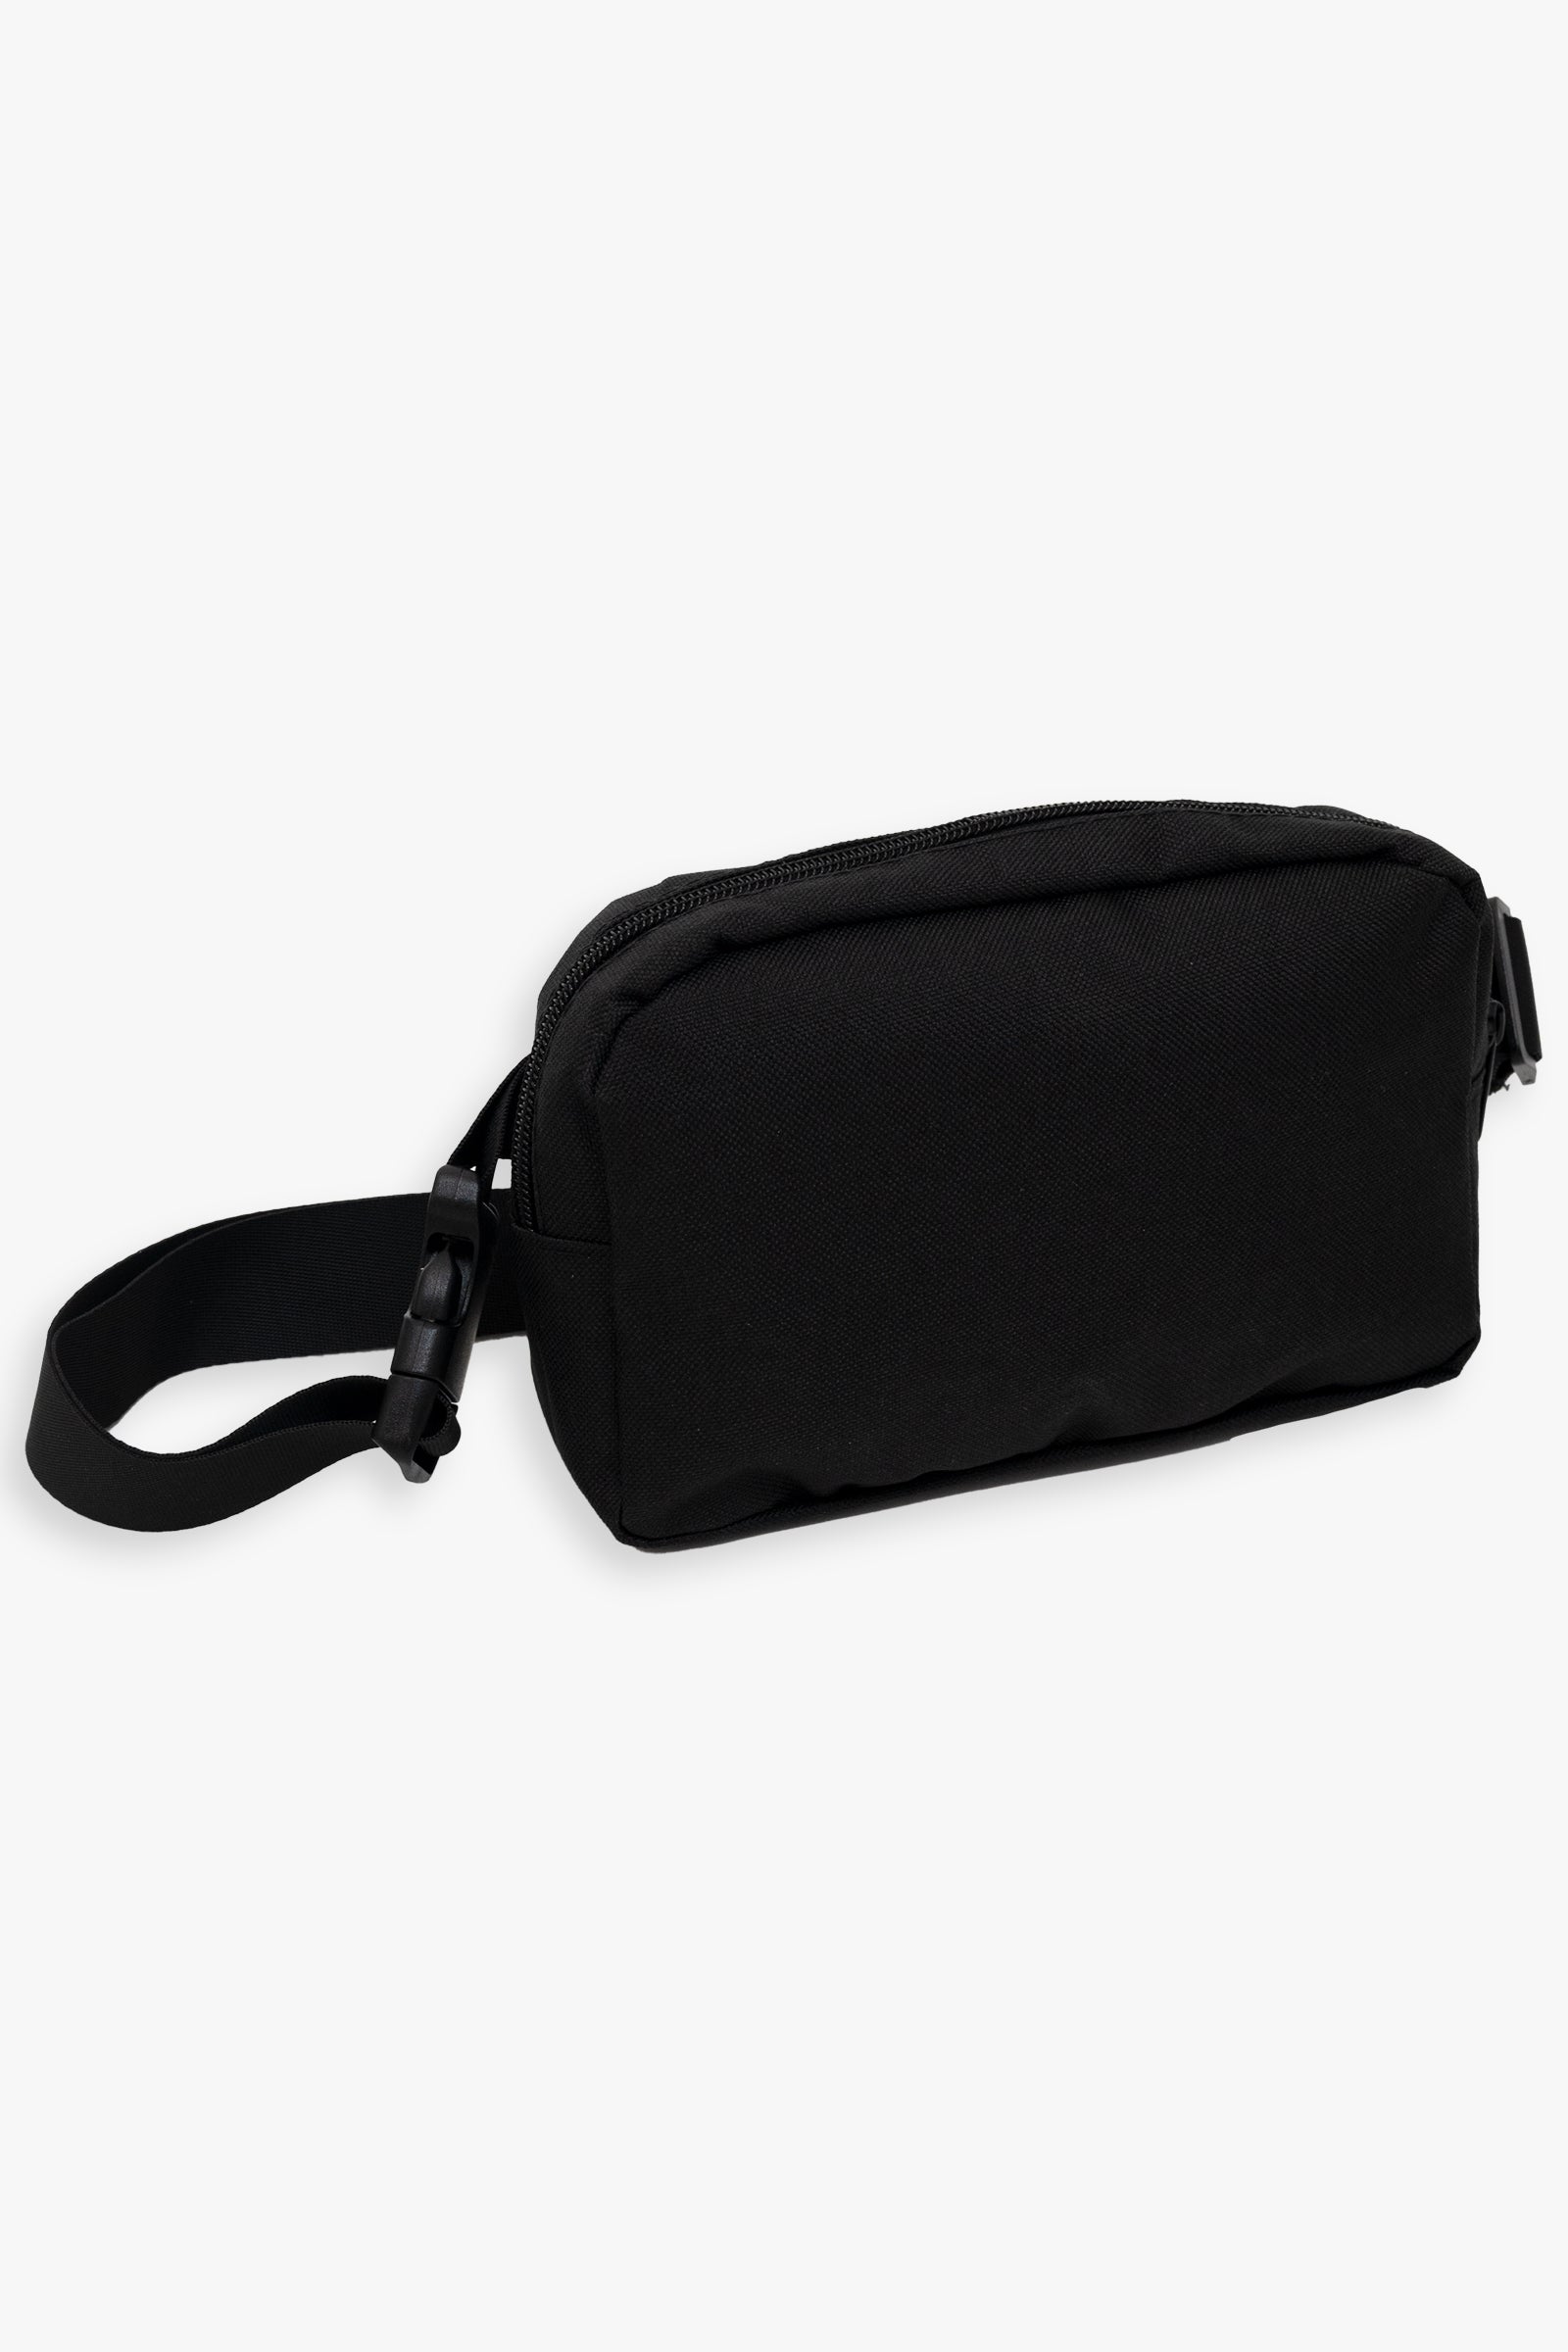 Gertex Customizable Black Belt Bag